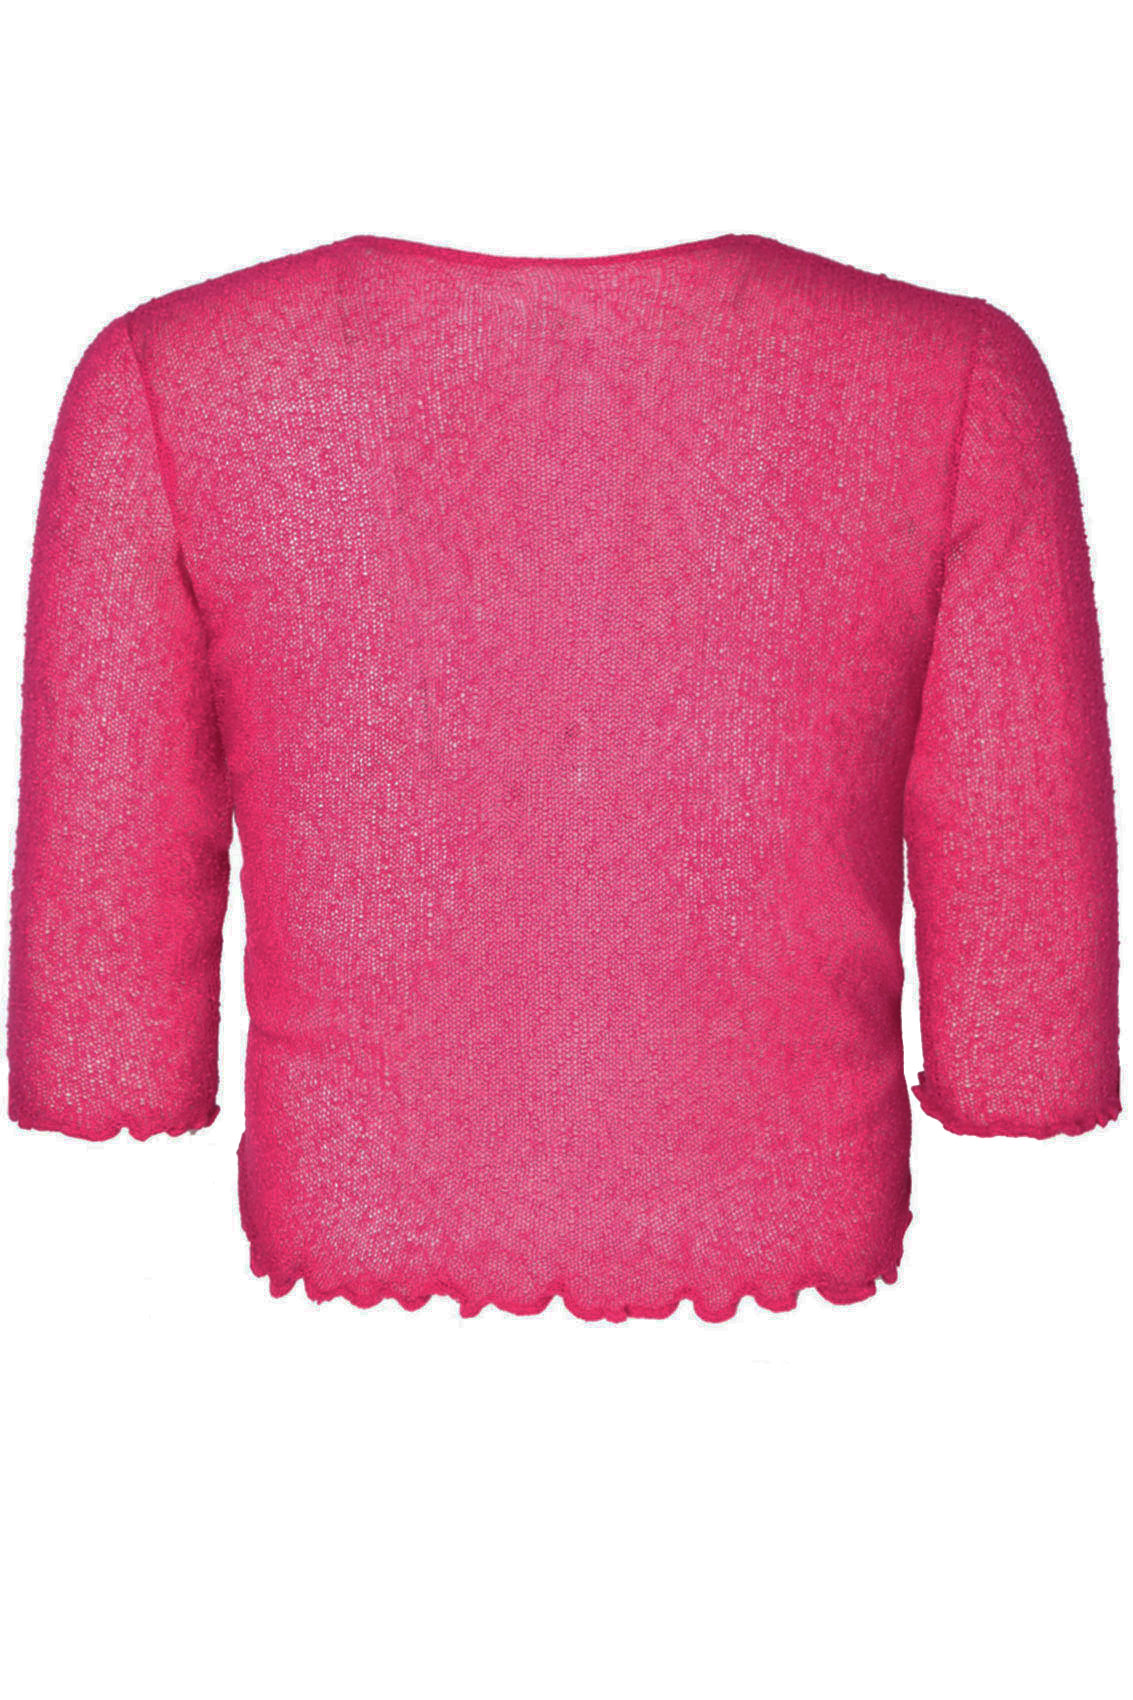 Pink Slub Knit Shrug With Tie Plus Size 14,16,18,20,22,24,26,28,30,32